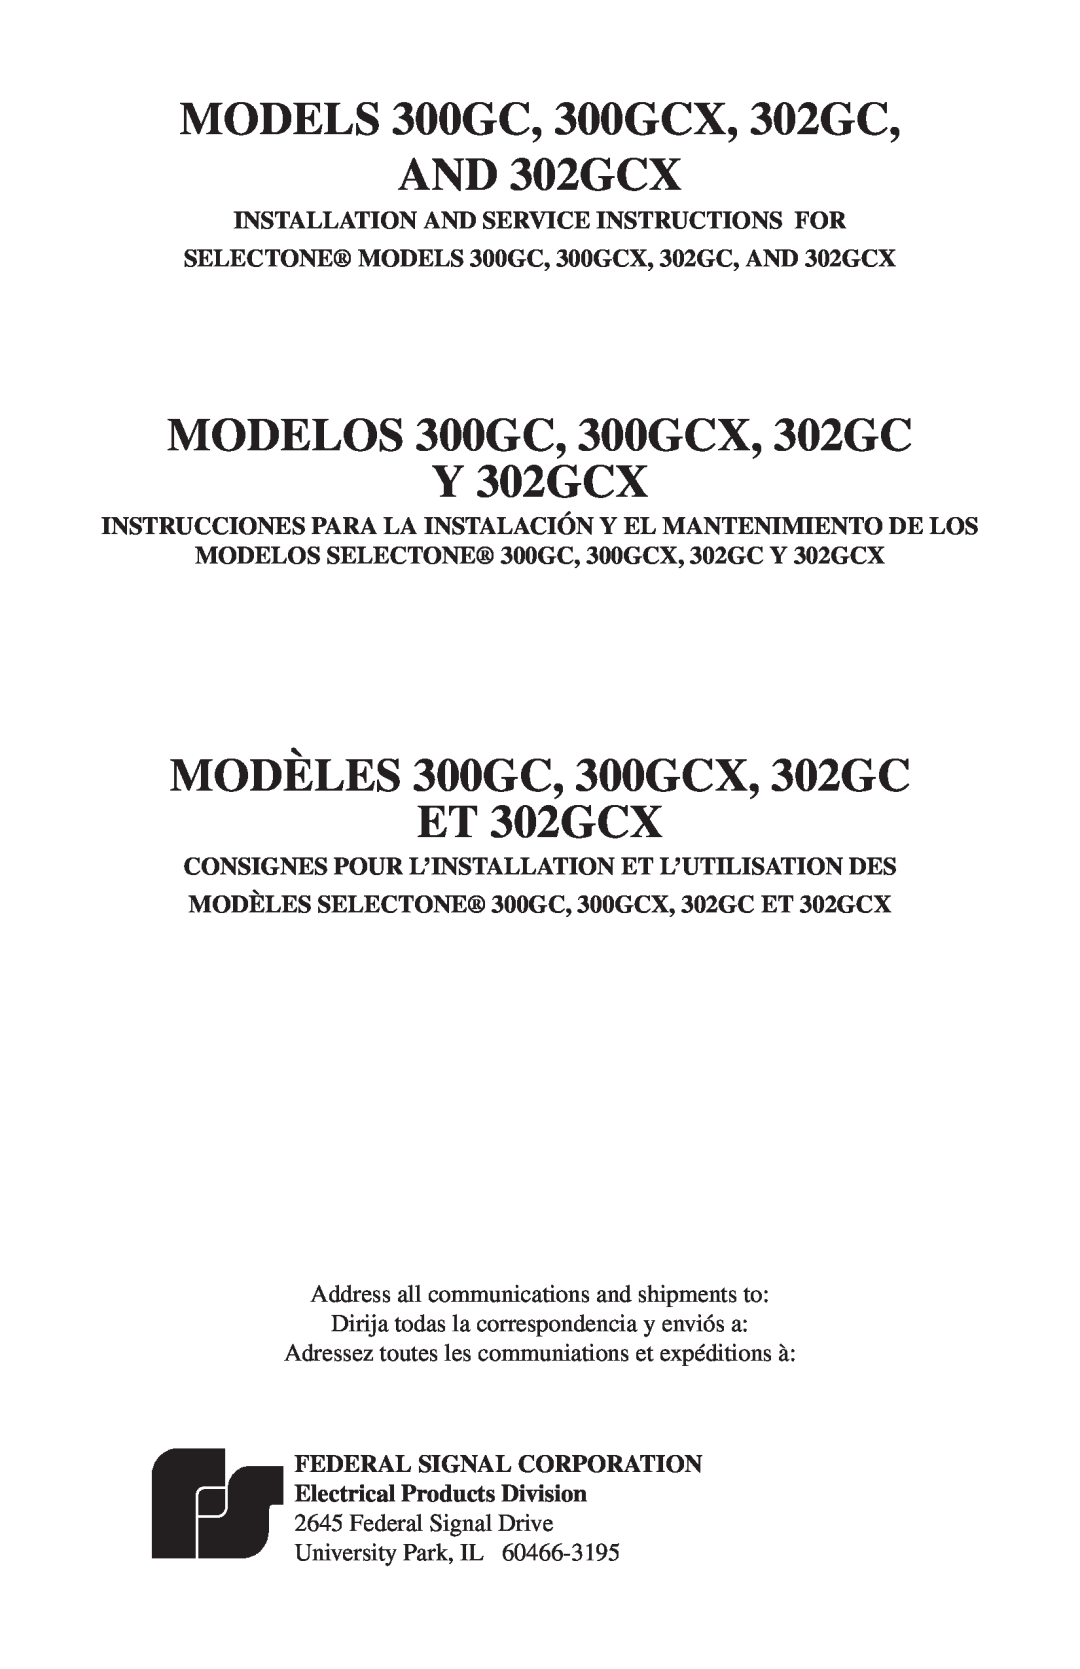 Federal Security Camera manual MODELS 300GC, 300GCX, 302GC AND 302GCX, MODELOS 300GC, 300GCX, 302GC Y 302GCX 